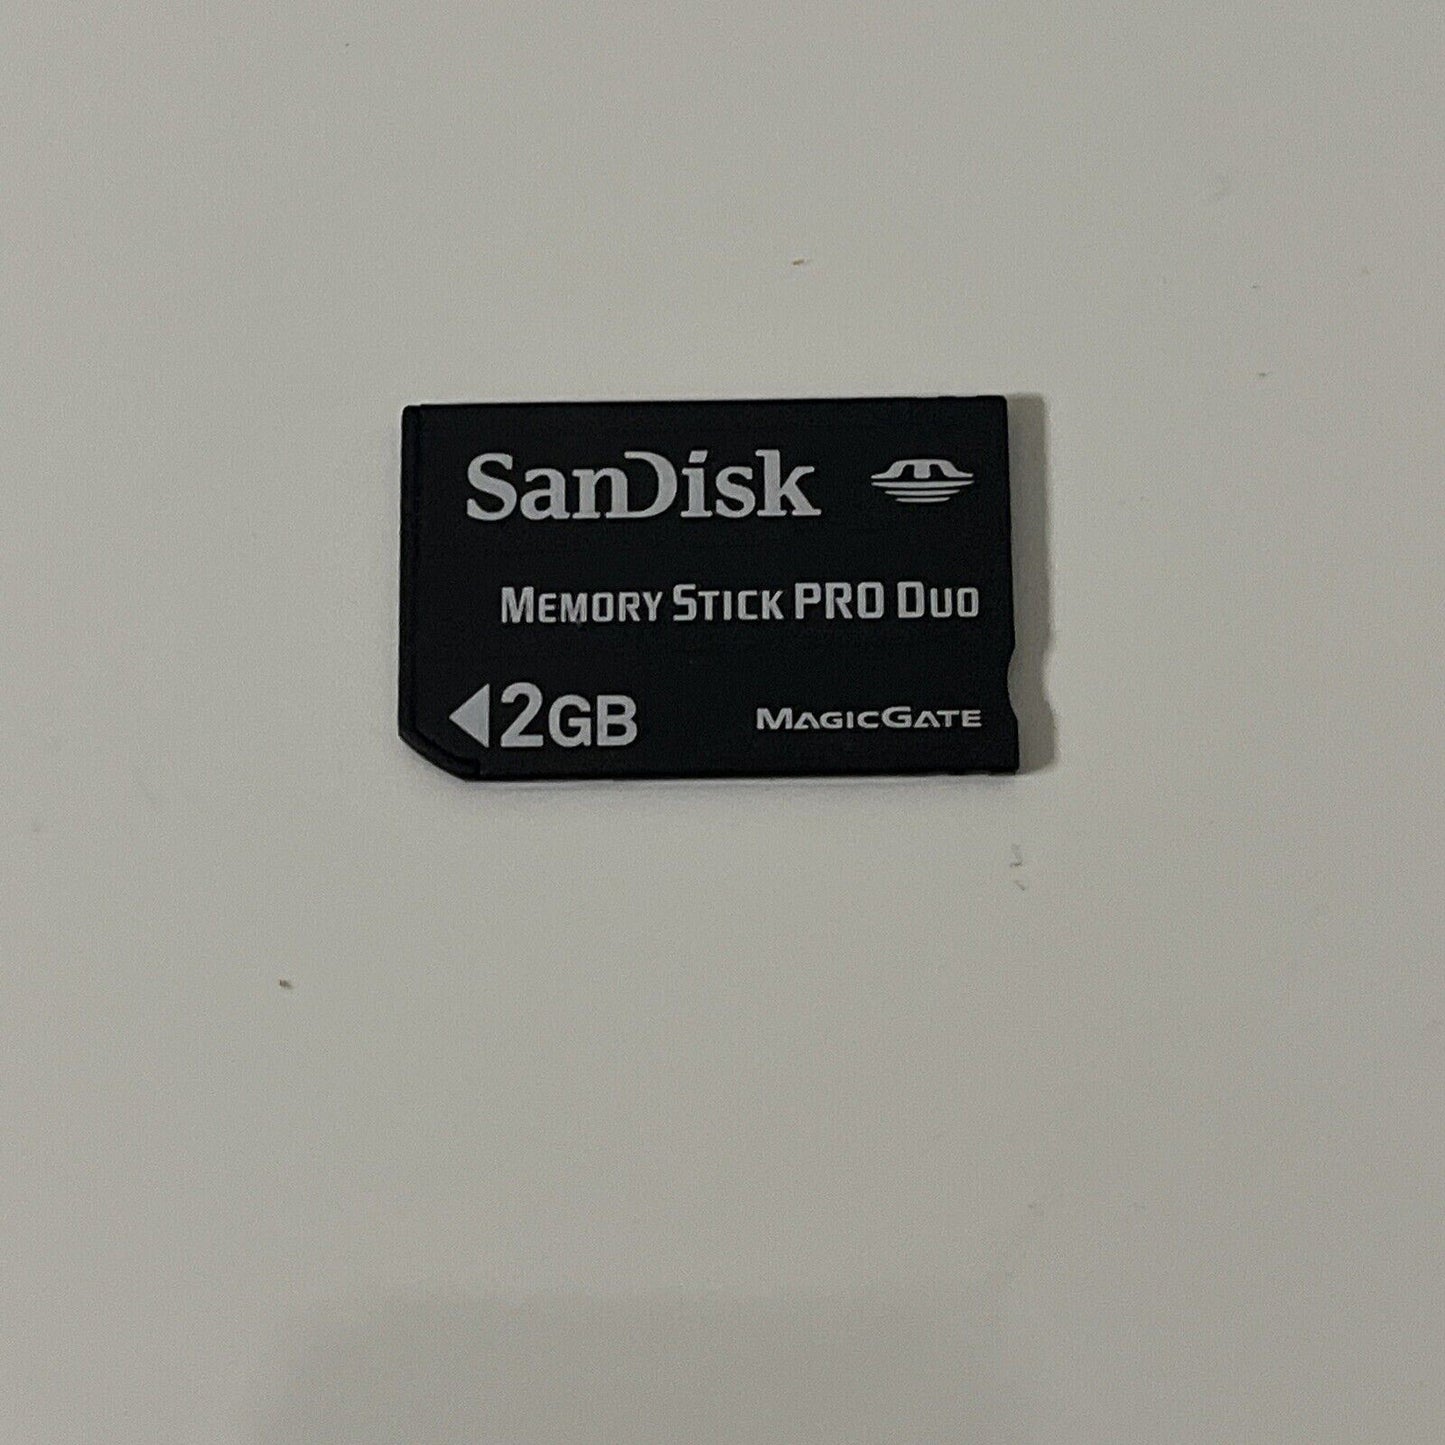 SanDisk Memory Stick Pro Duo 2 GB MagicGate for Sony PSP Cybershot Camera